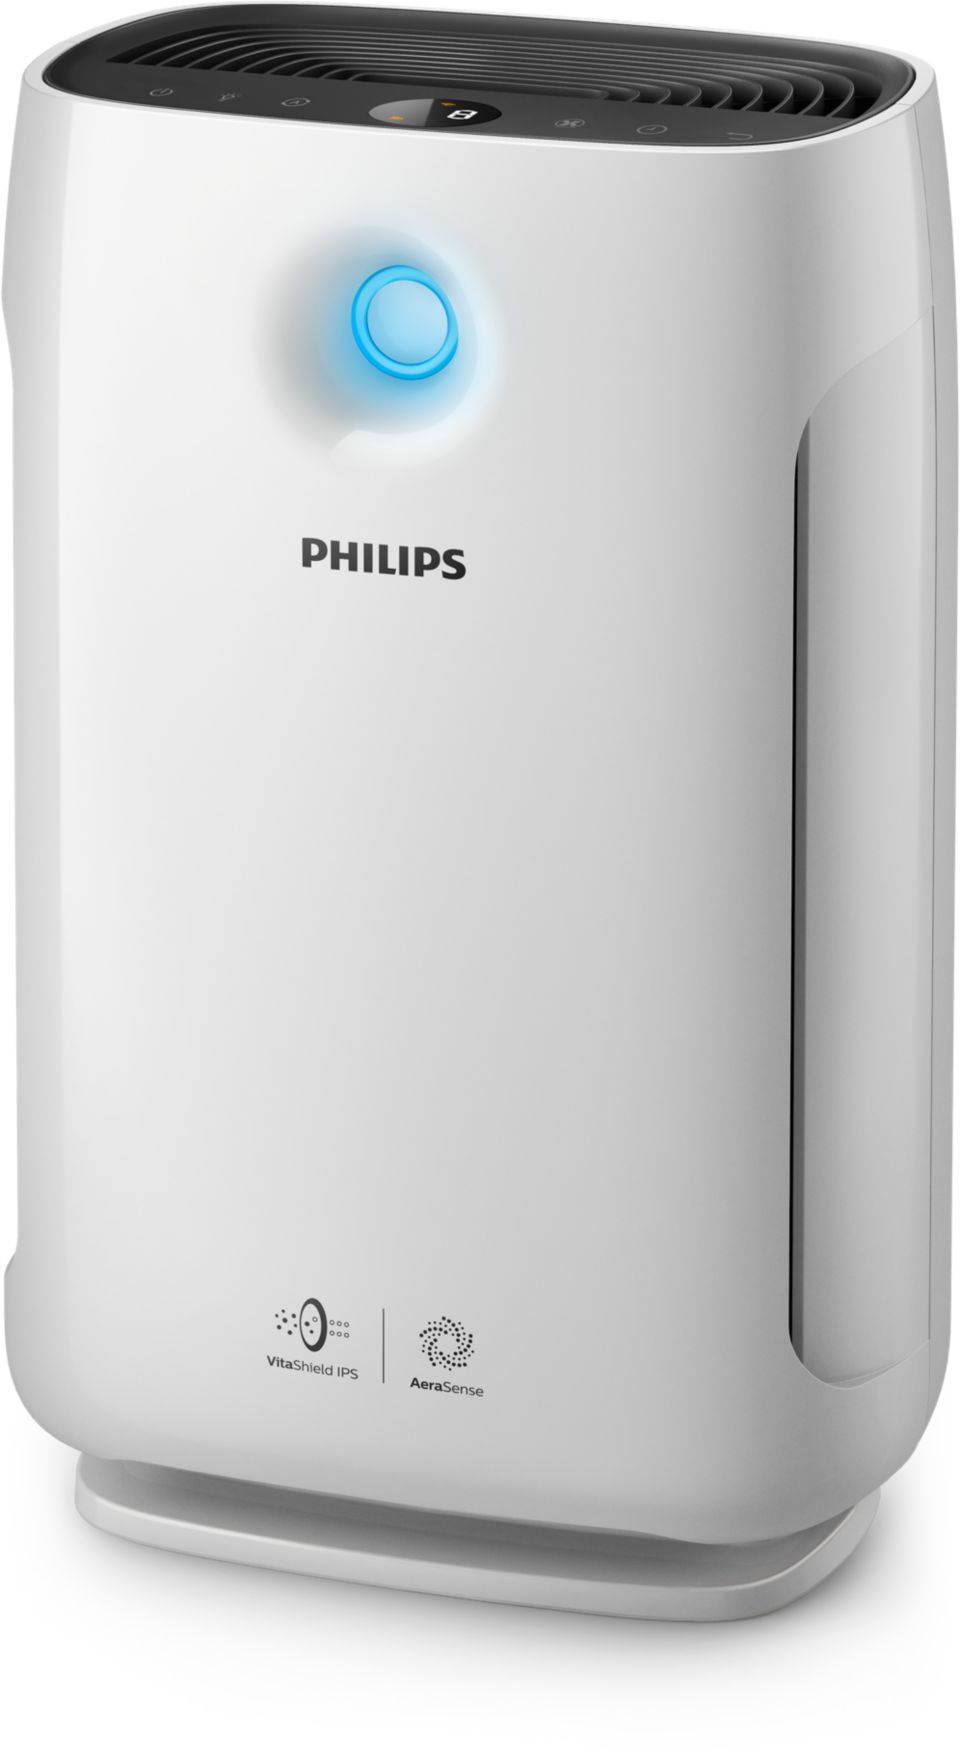 Buy Philips Series 6000 VitaShield IPS Technology Air Purifier